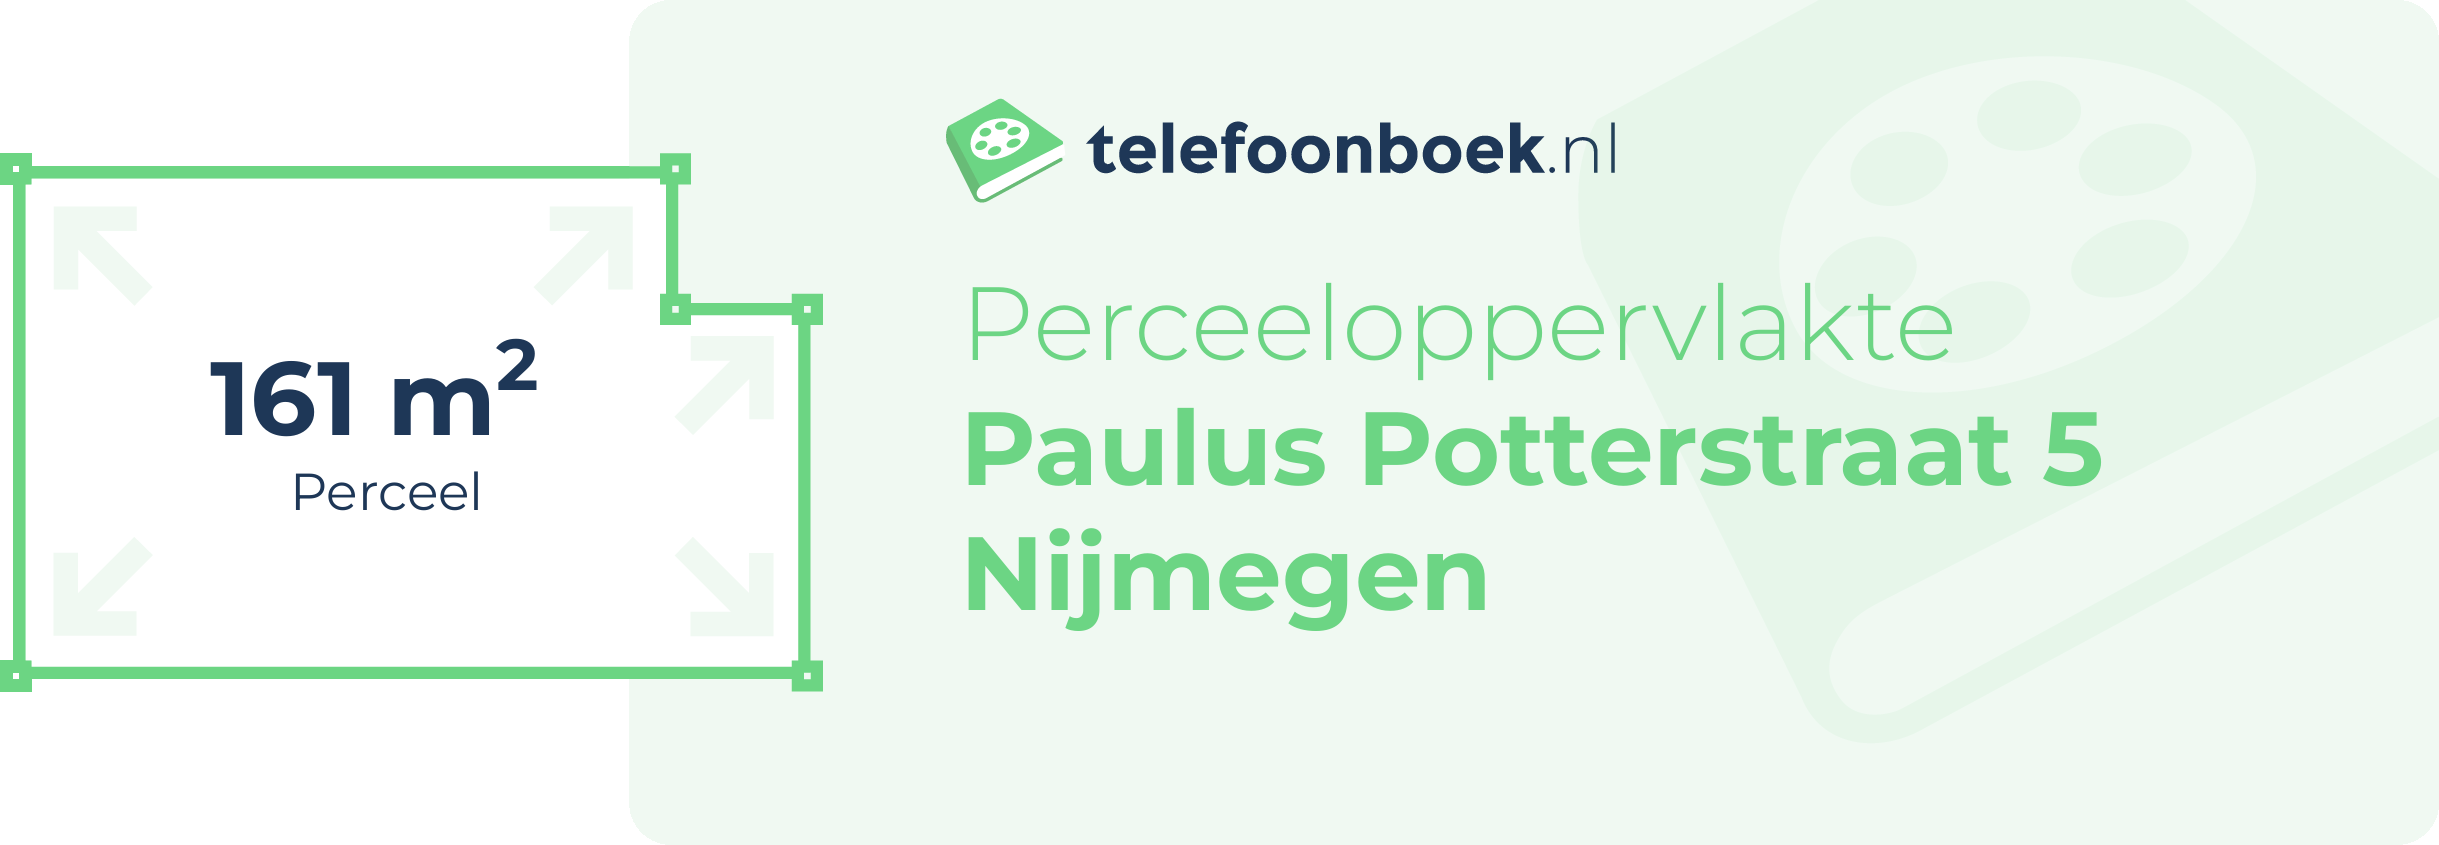 Perceeloppervlakte Paulus Potterstraat 5 Nijmegen